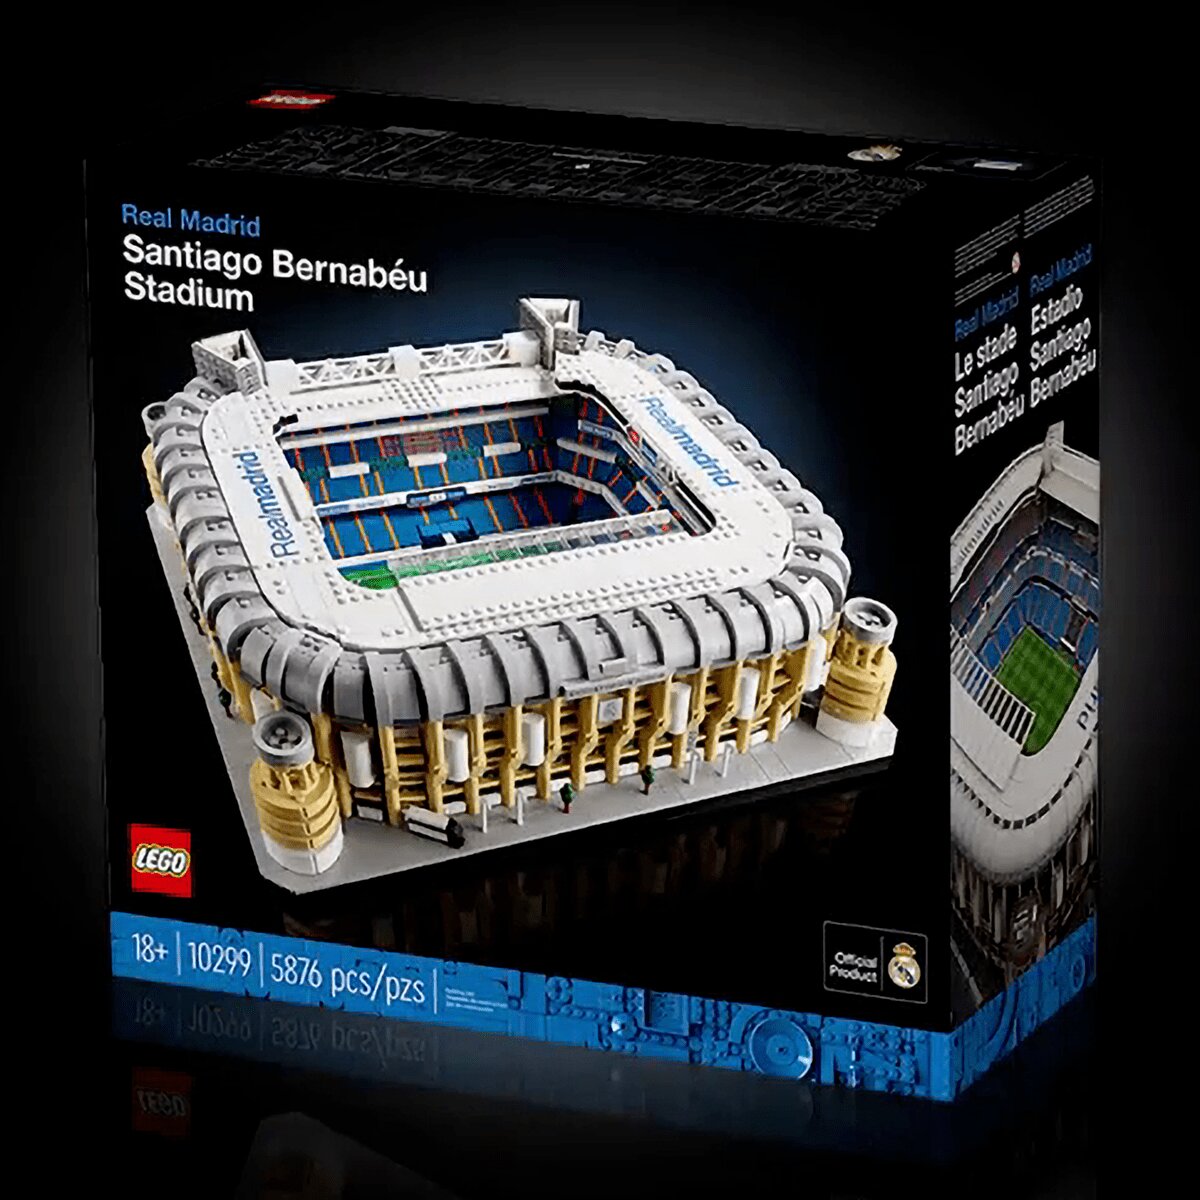 LEGO 10299 Real Madrid Santiago Bernabéu Stadium : premier visuel officiel  - HelloBricks